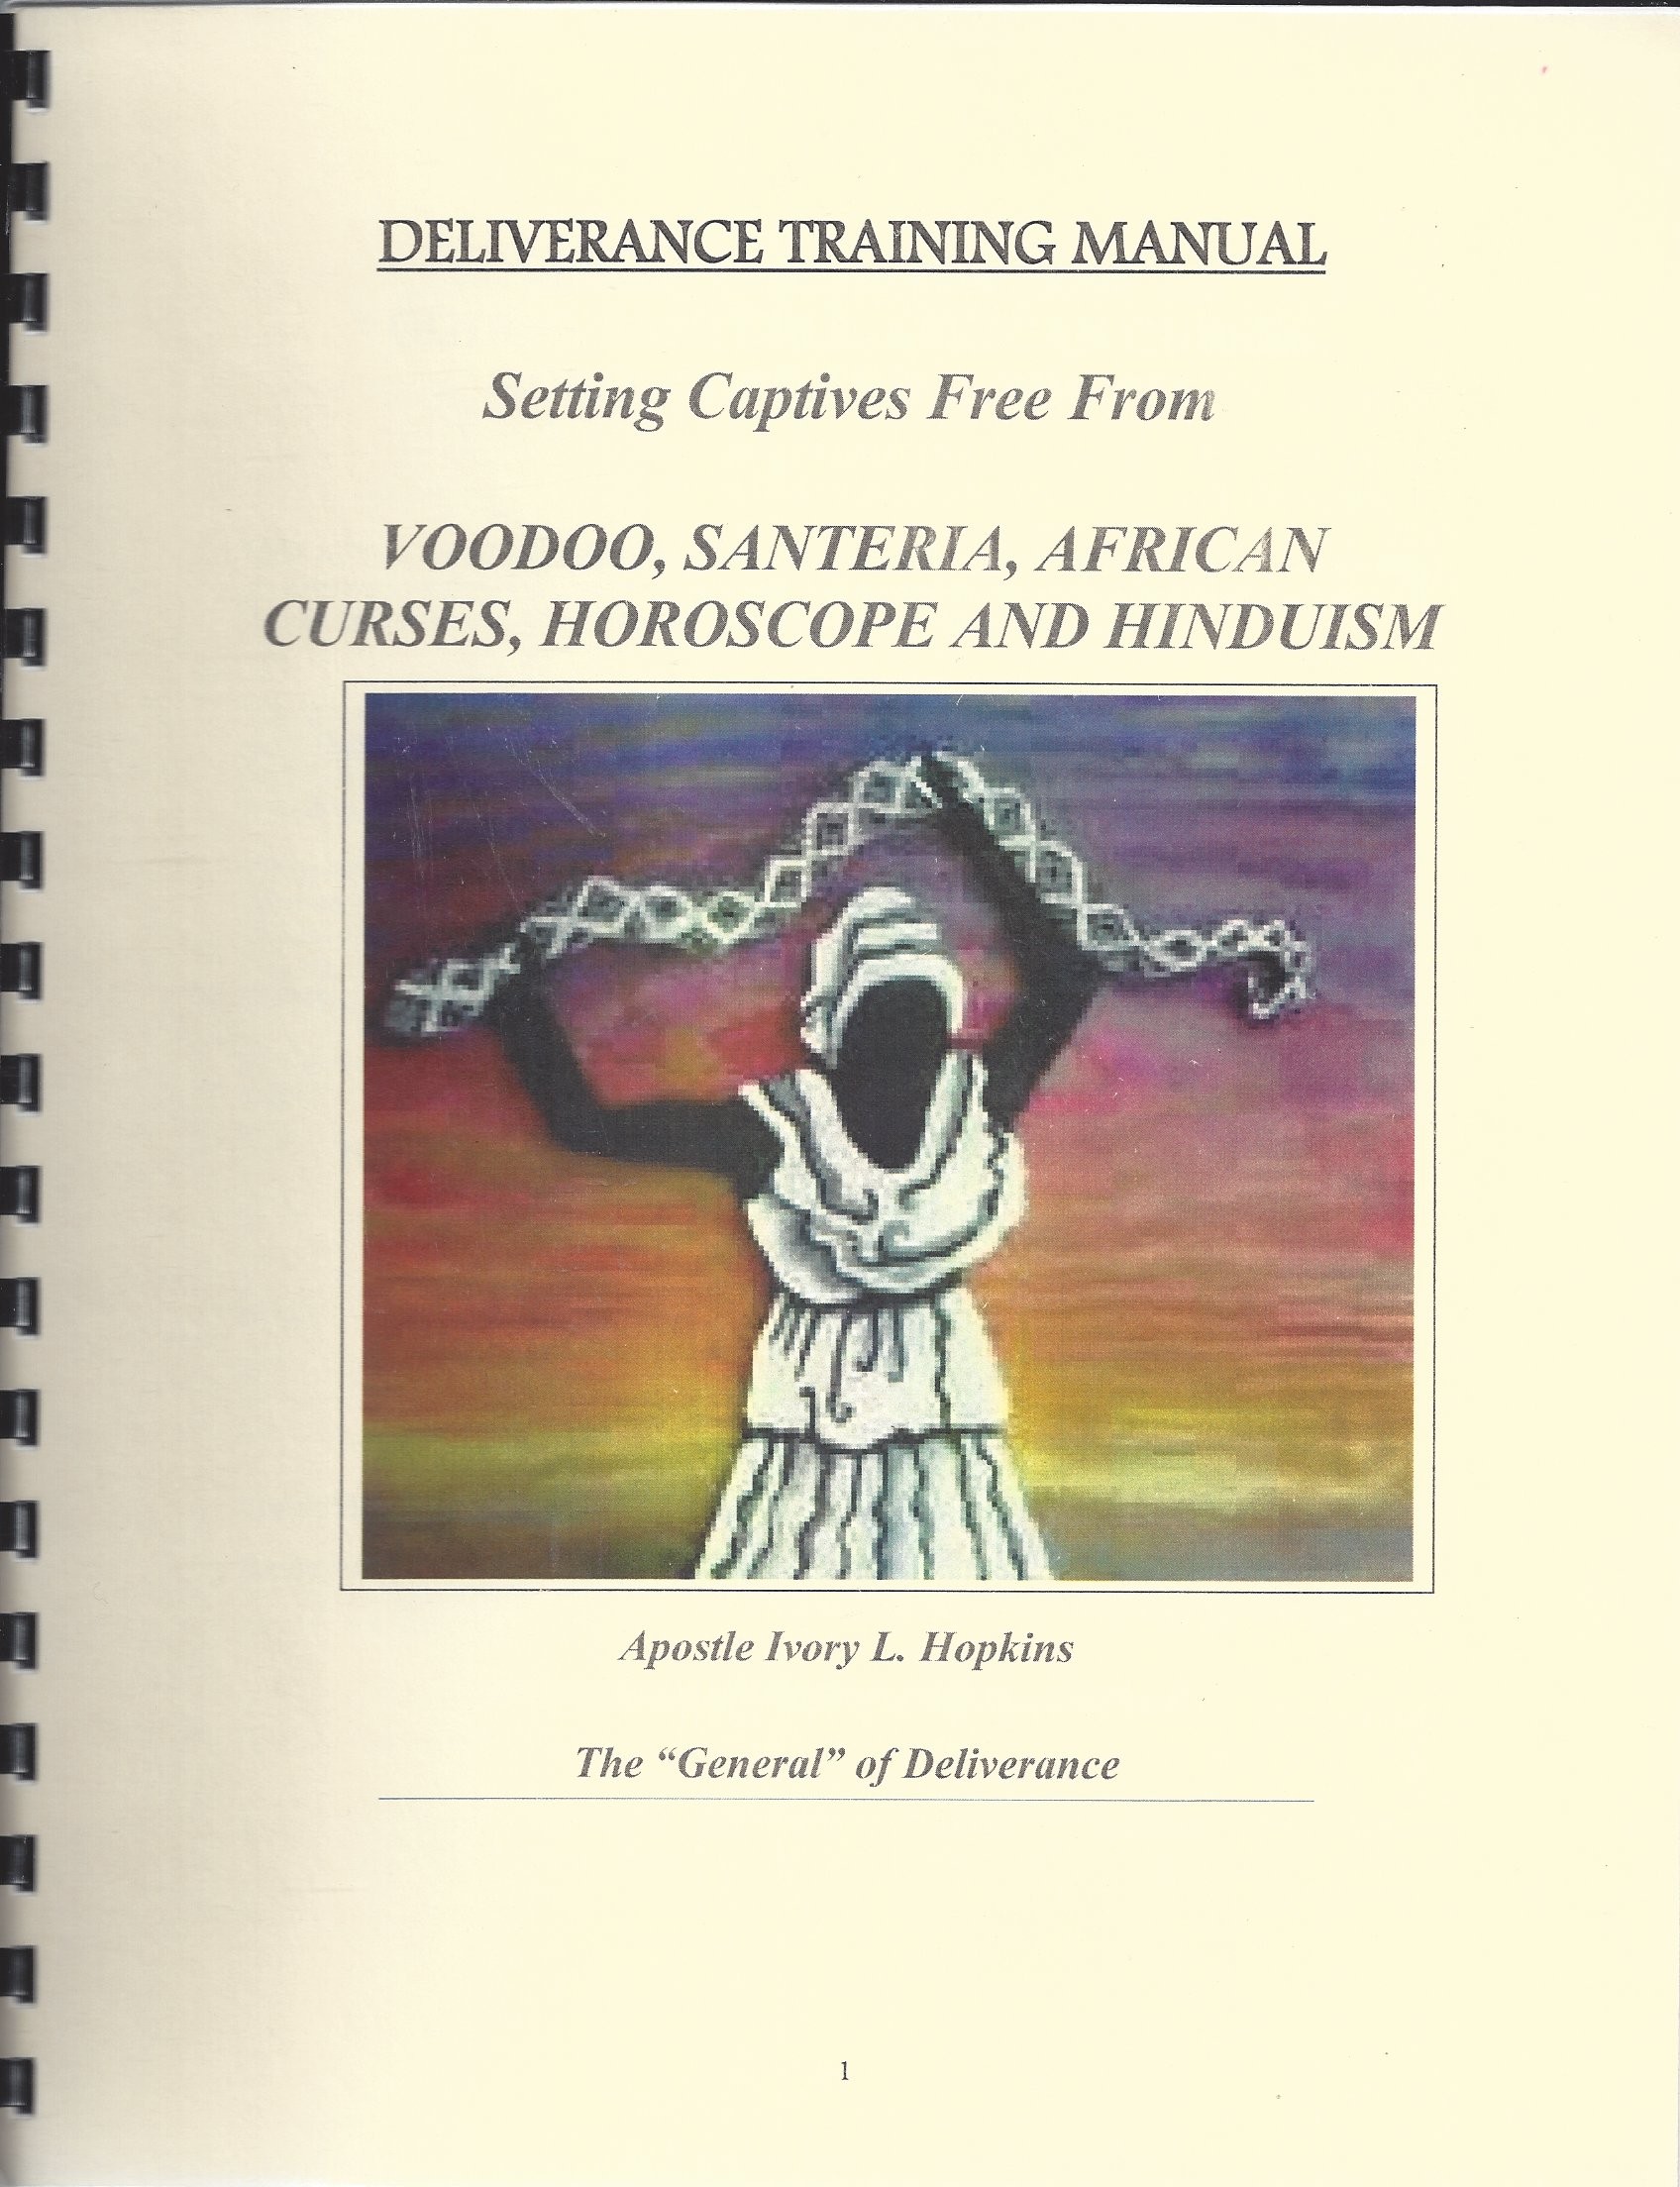 Voodoo, Santeria, African Curses